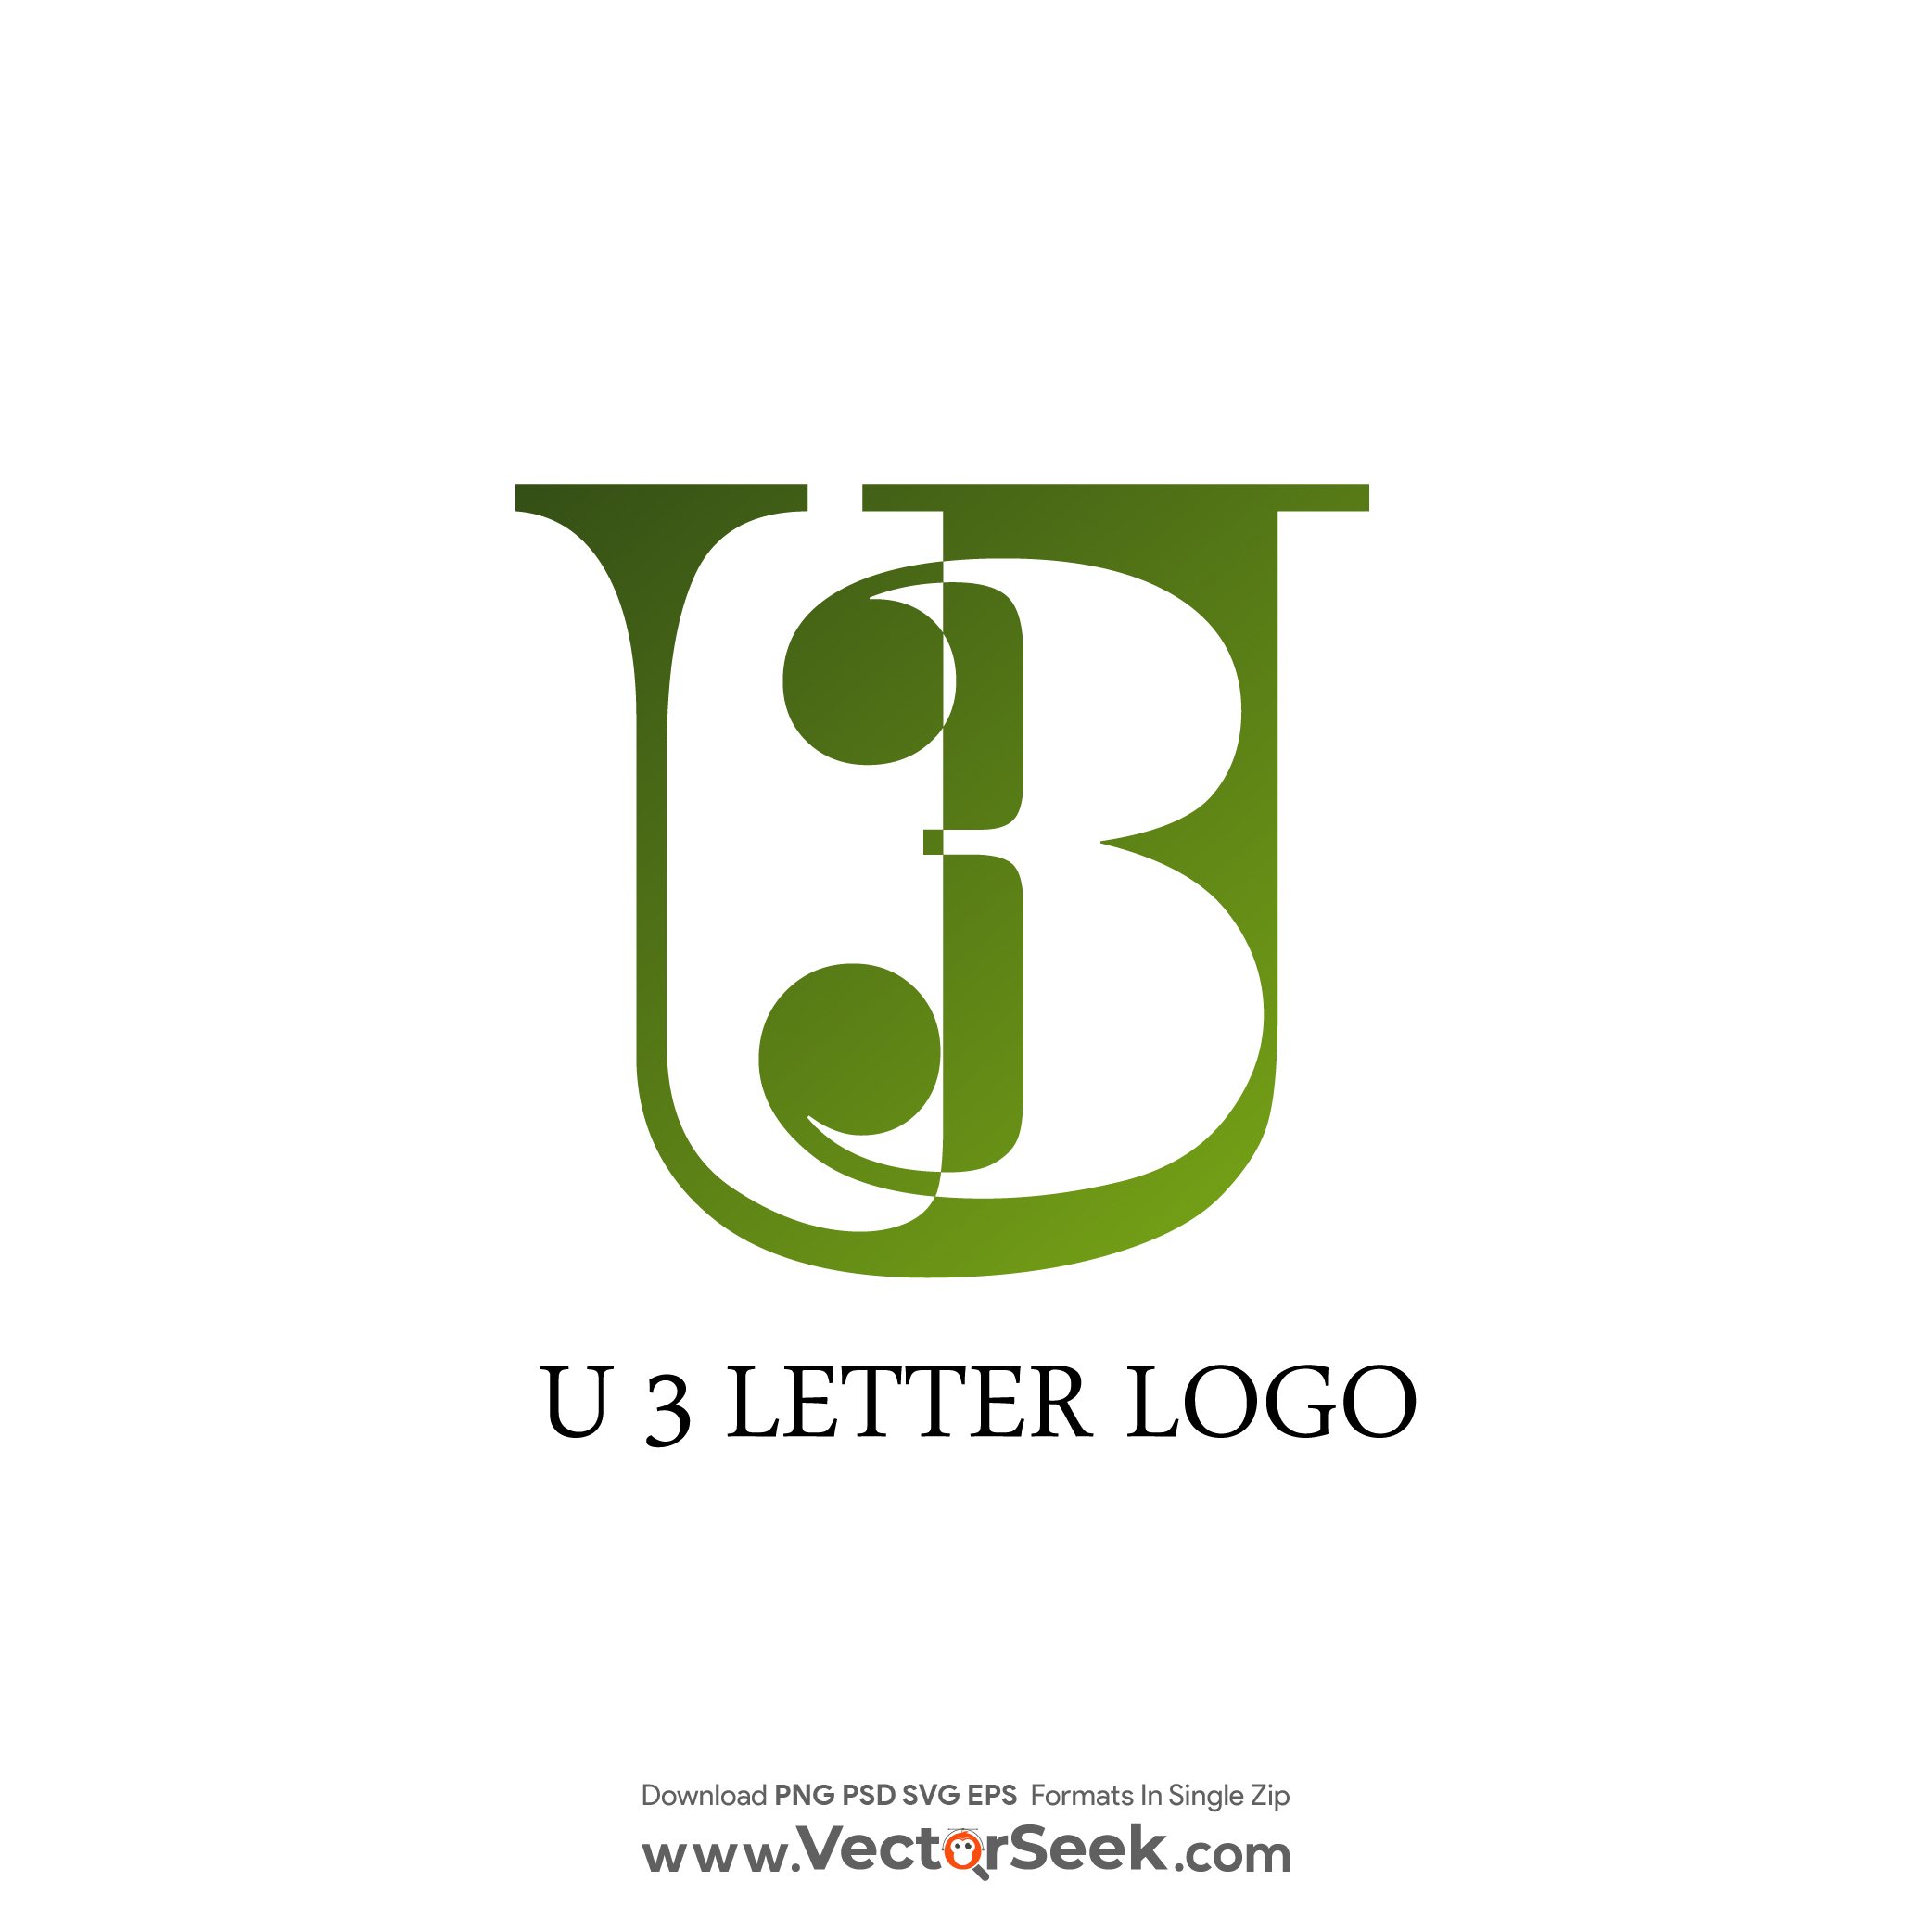 U3 Letter Logo Vector